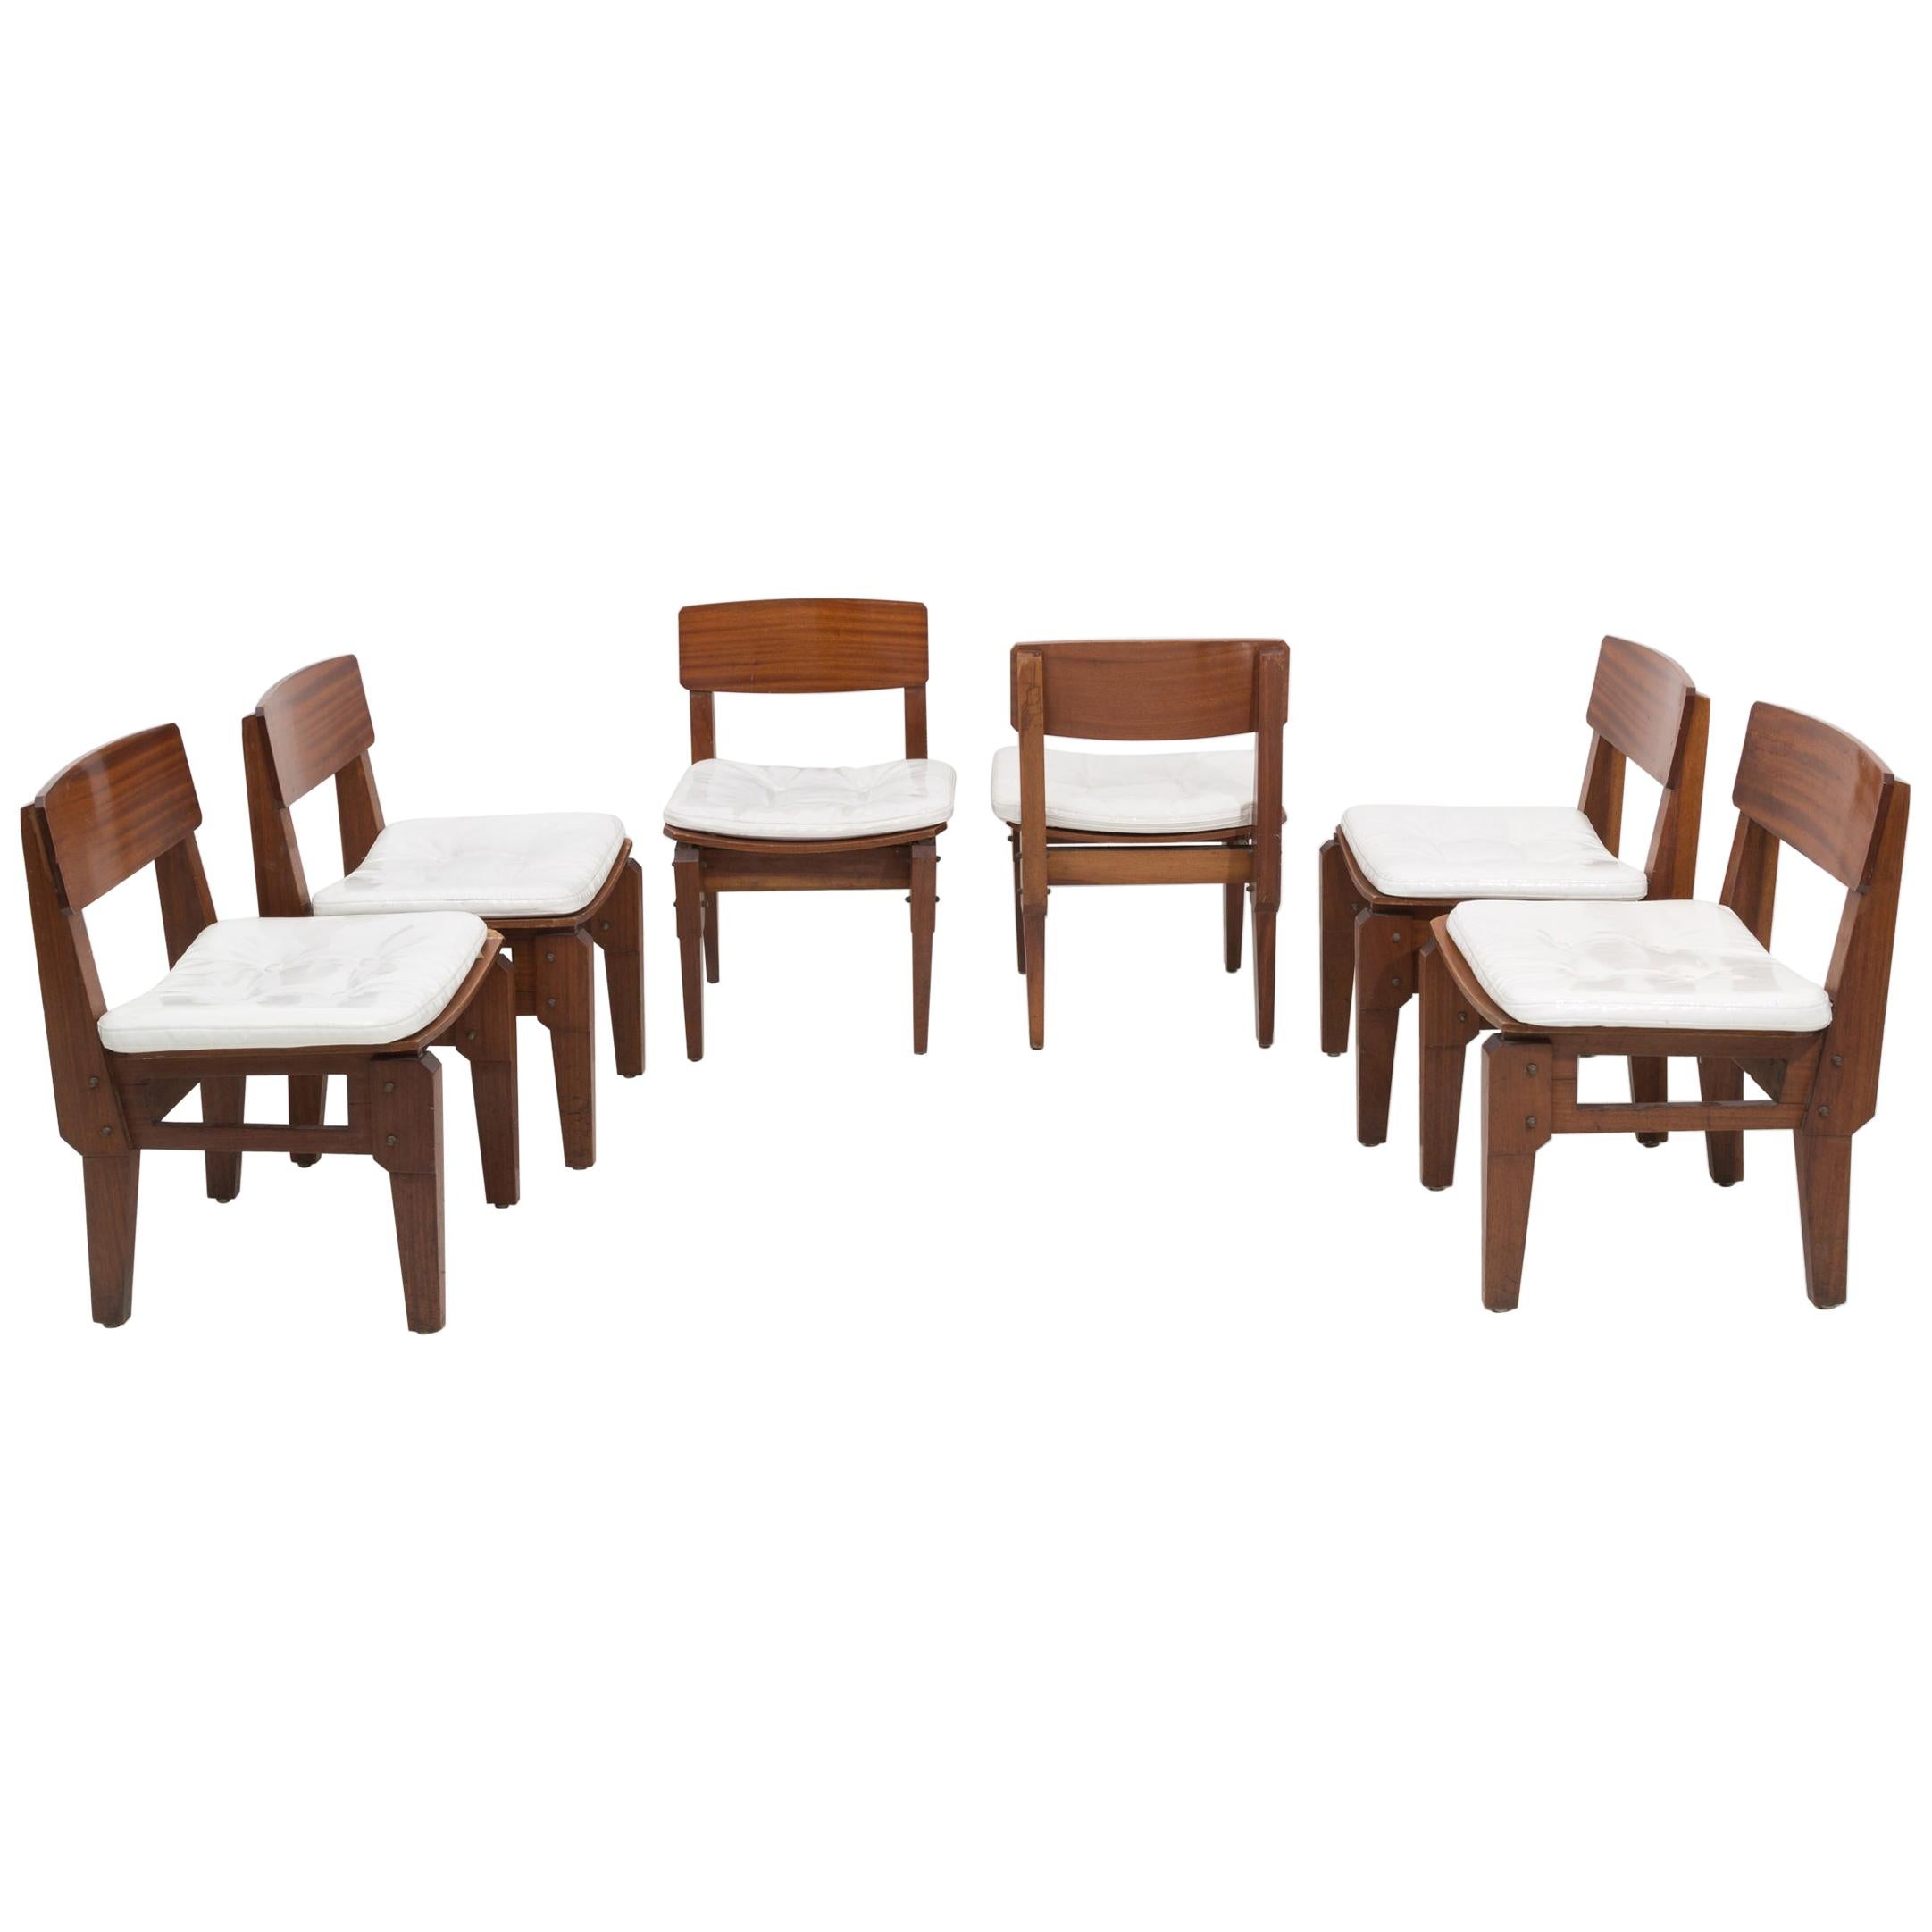 Set of Six Italian Chairs by Arch. Vito Sangirardi for Pallante shop, Bari